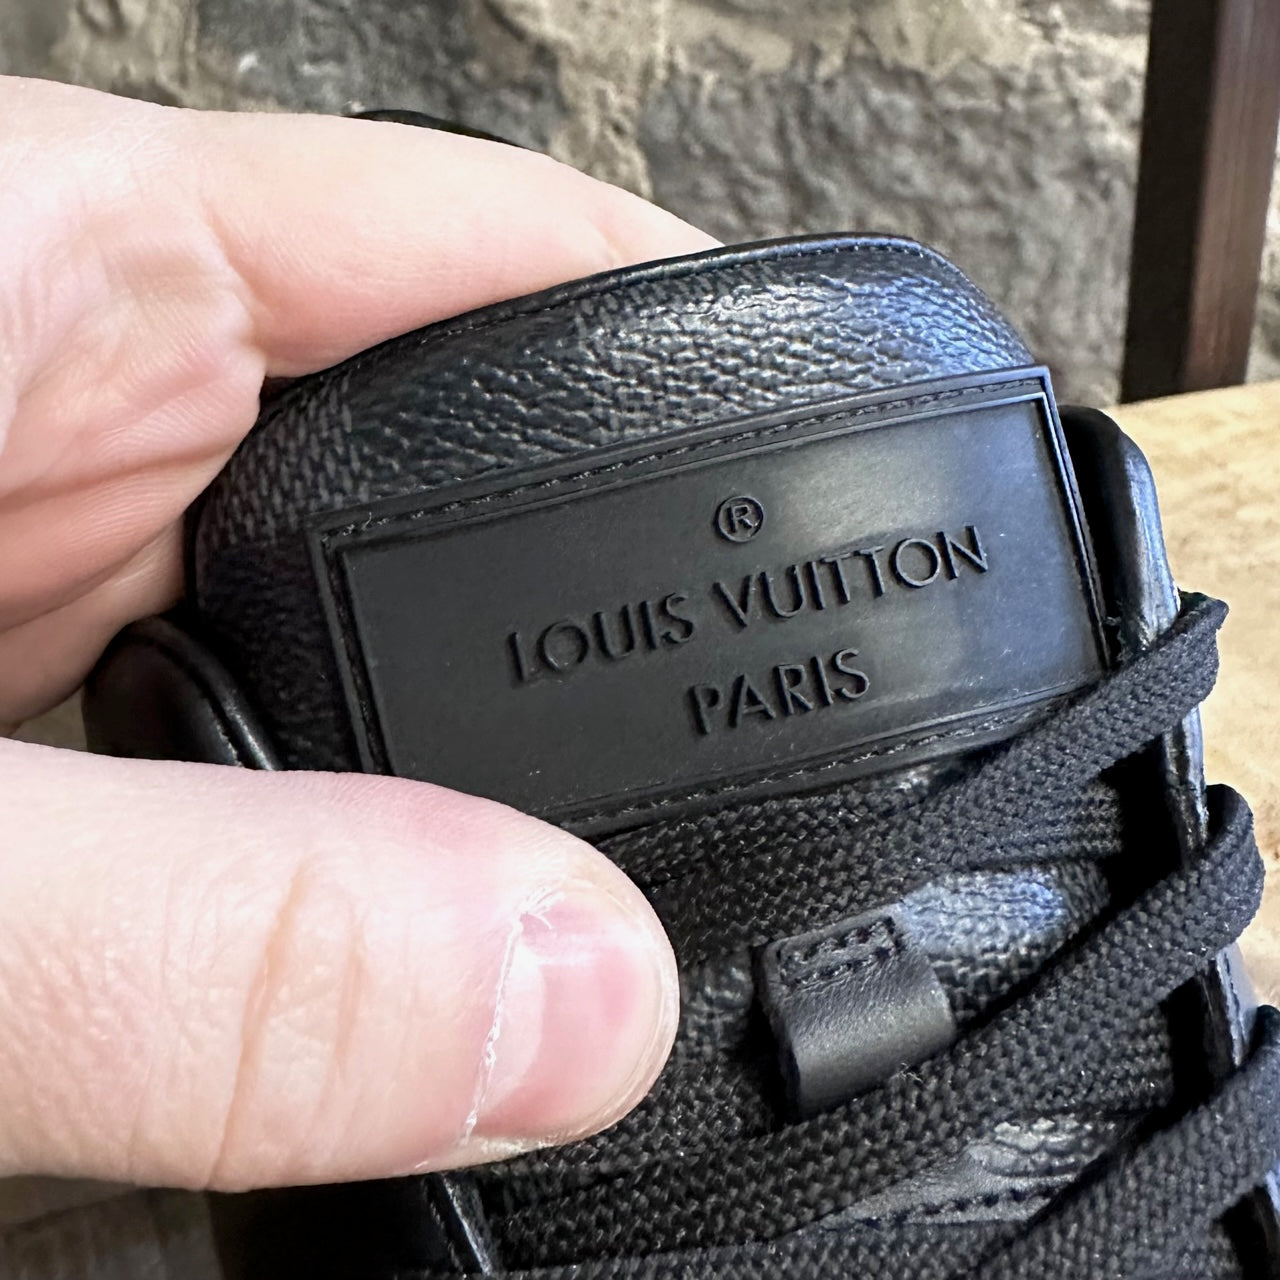 Louis Vuitton Sneakers for Men